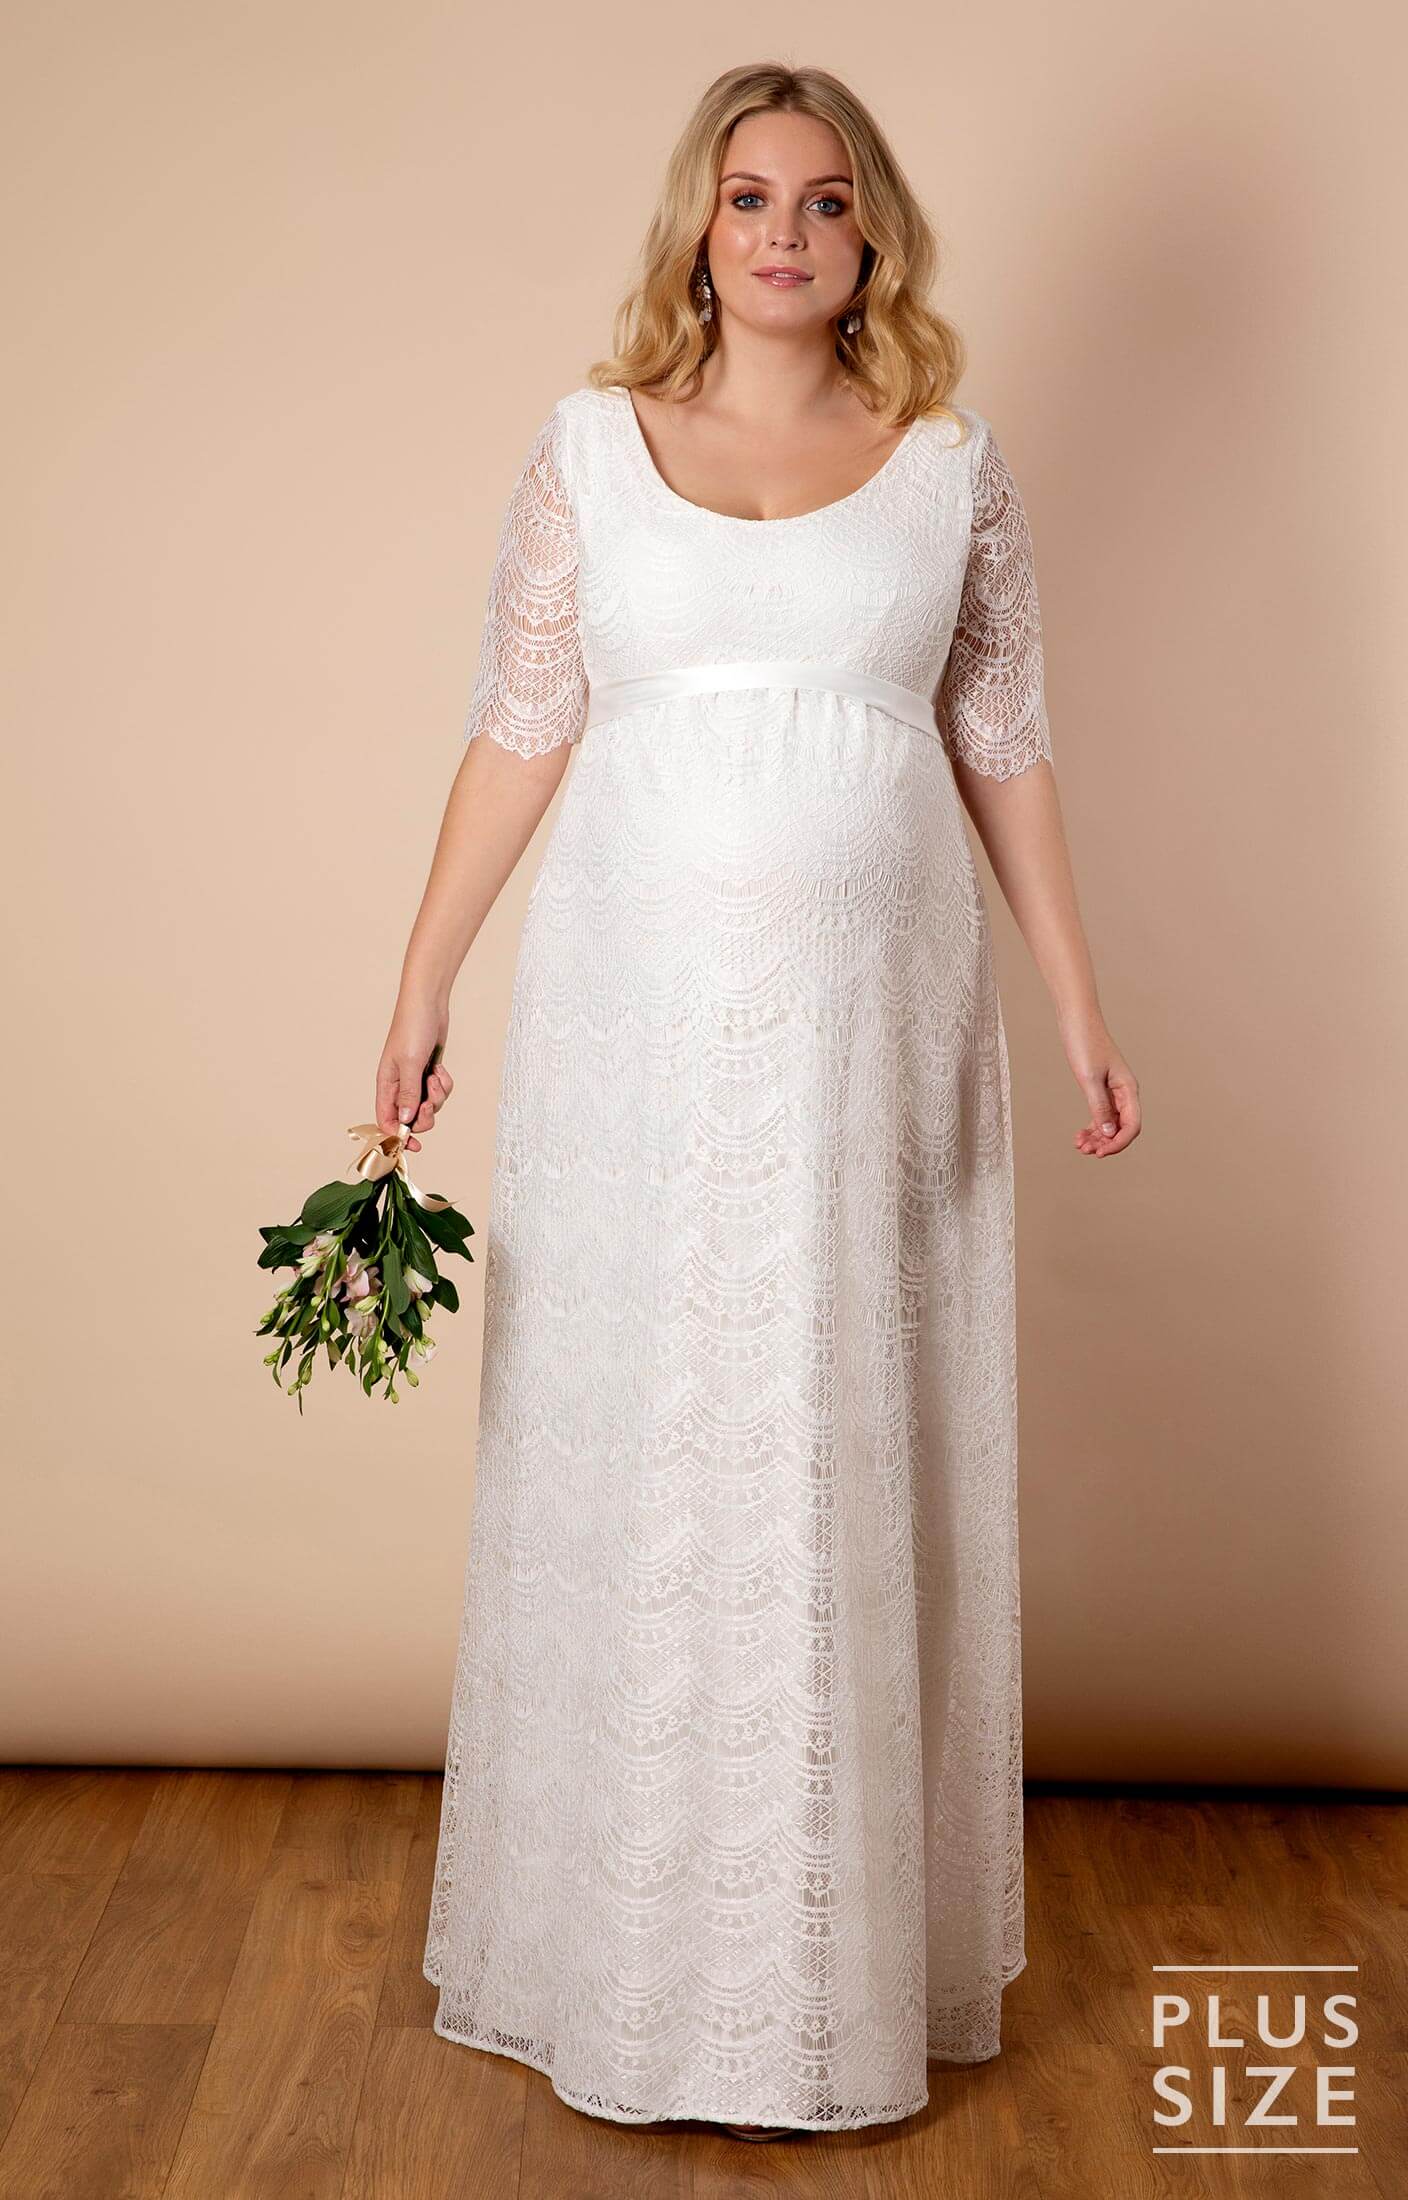 Verona Plus Size Maternity Wedding Gown Ivory White - Maternity Wedding ...